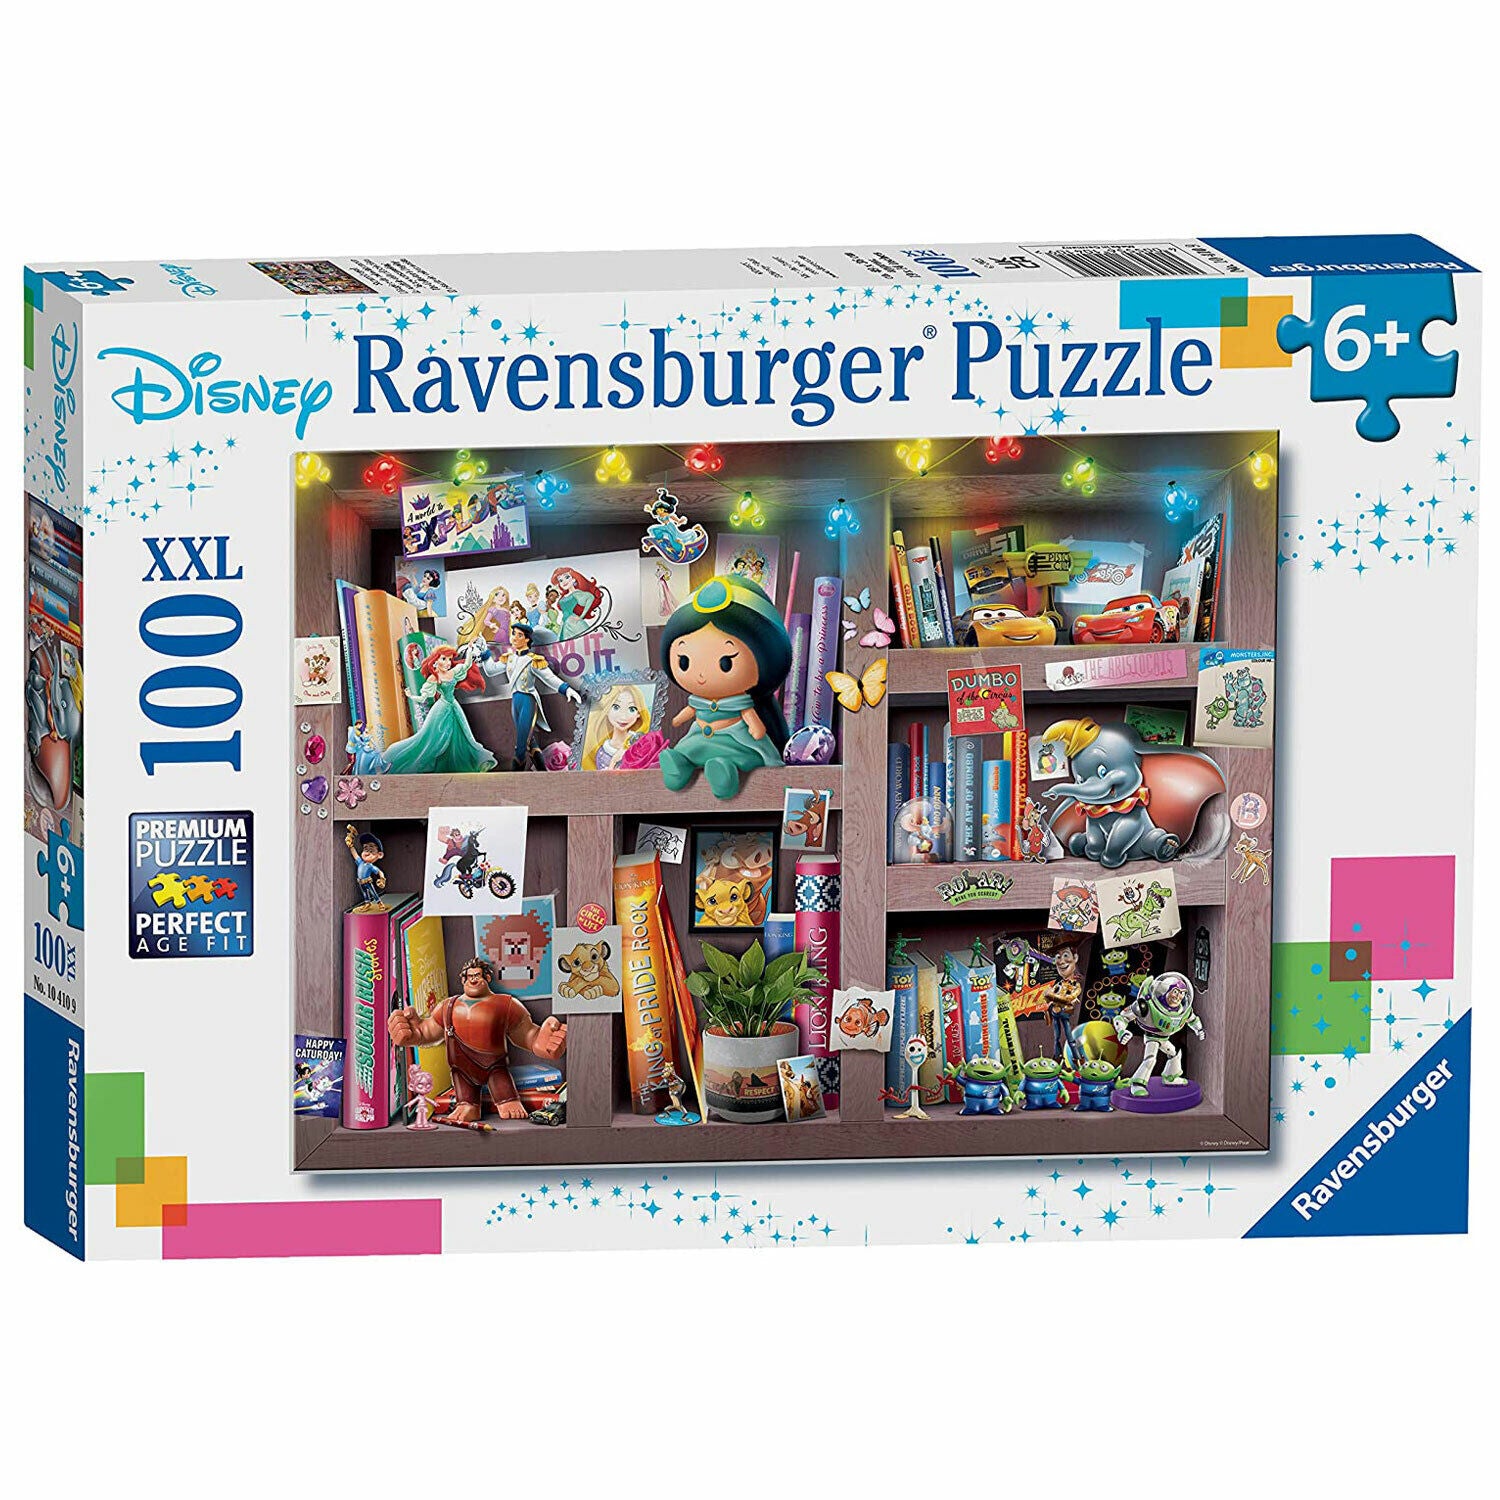 Ravensburger Disney Multicharacter XXL Puzzle - 100 Pieces - Collector's Display